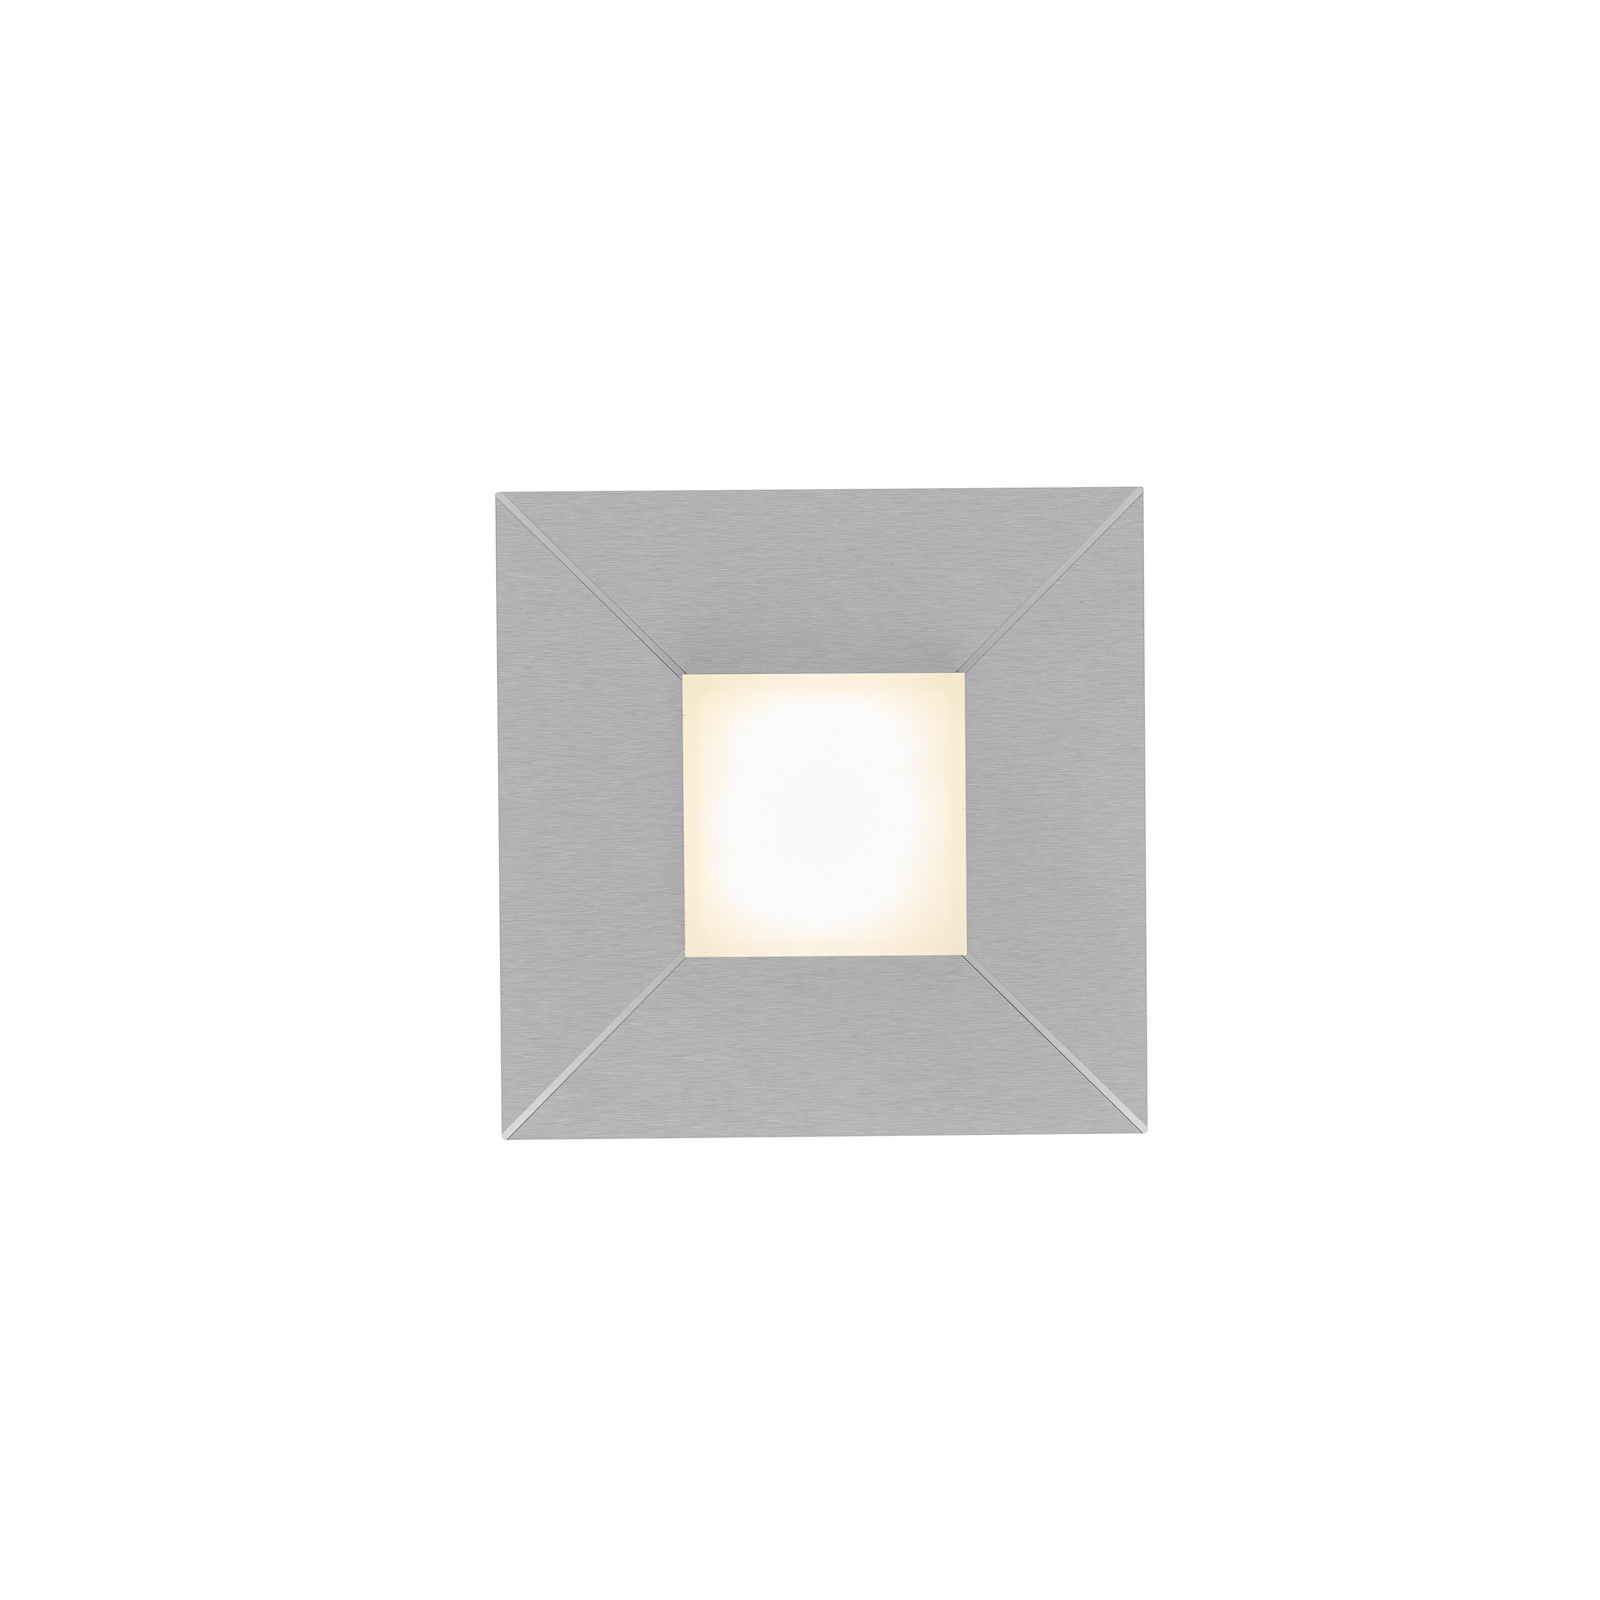 BANKAMP Diamond ceiling light 17 x 17 cm, silver